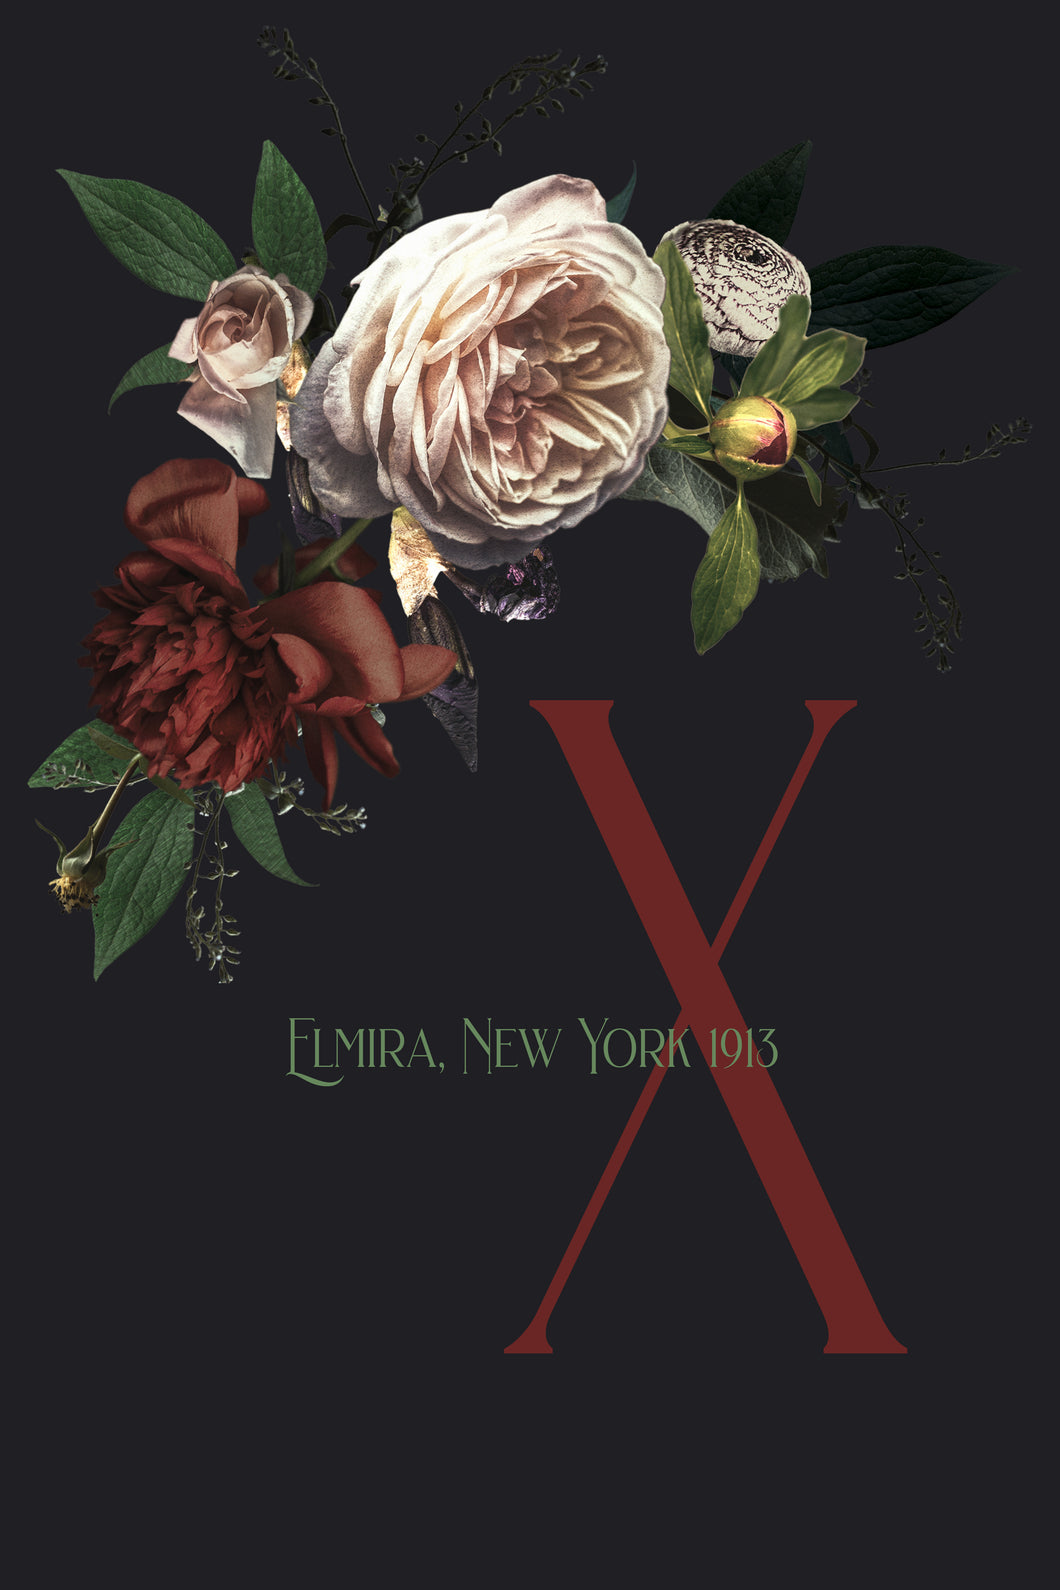 X - Elmira, New York  -- COMING SOON